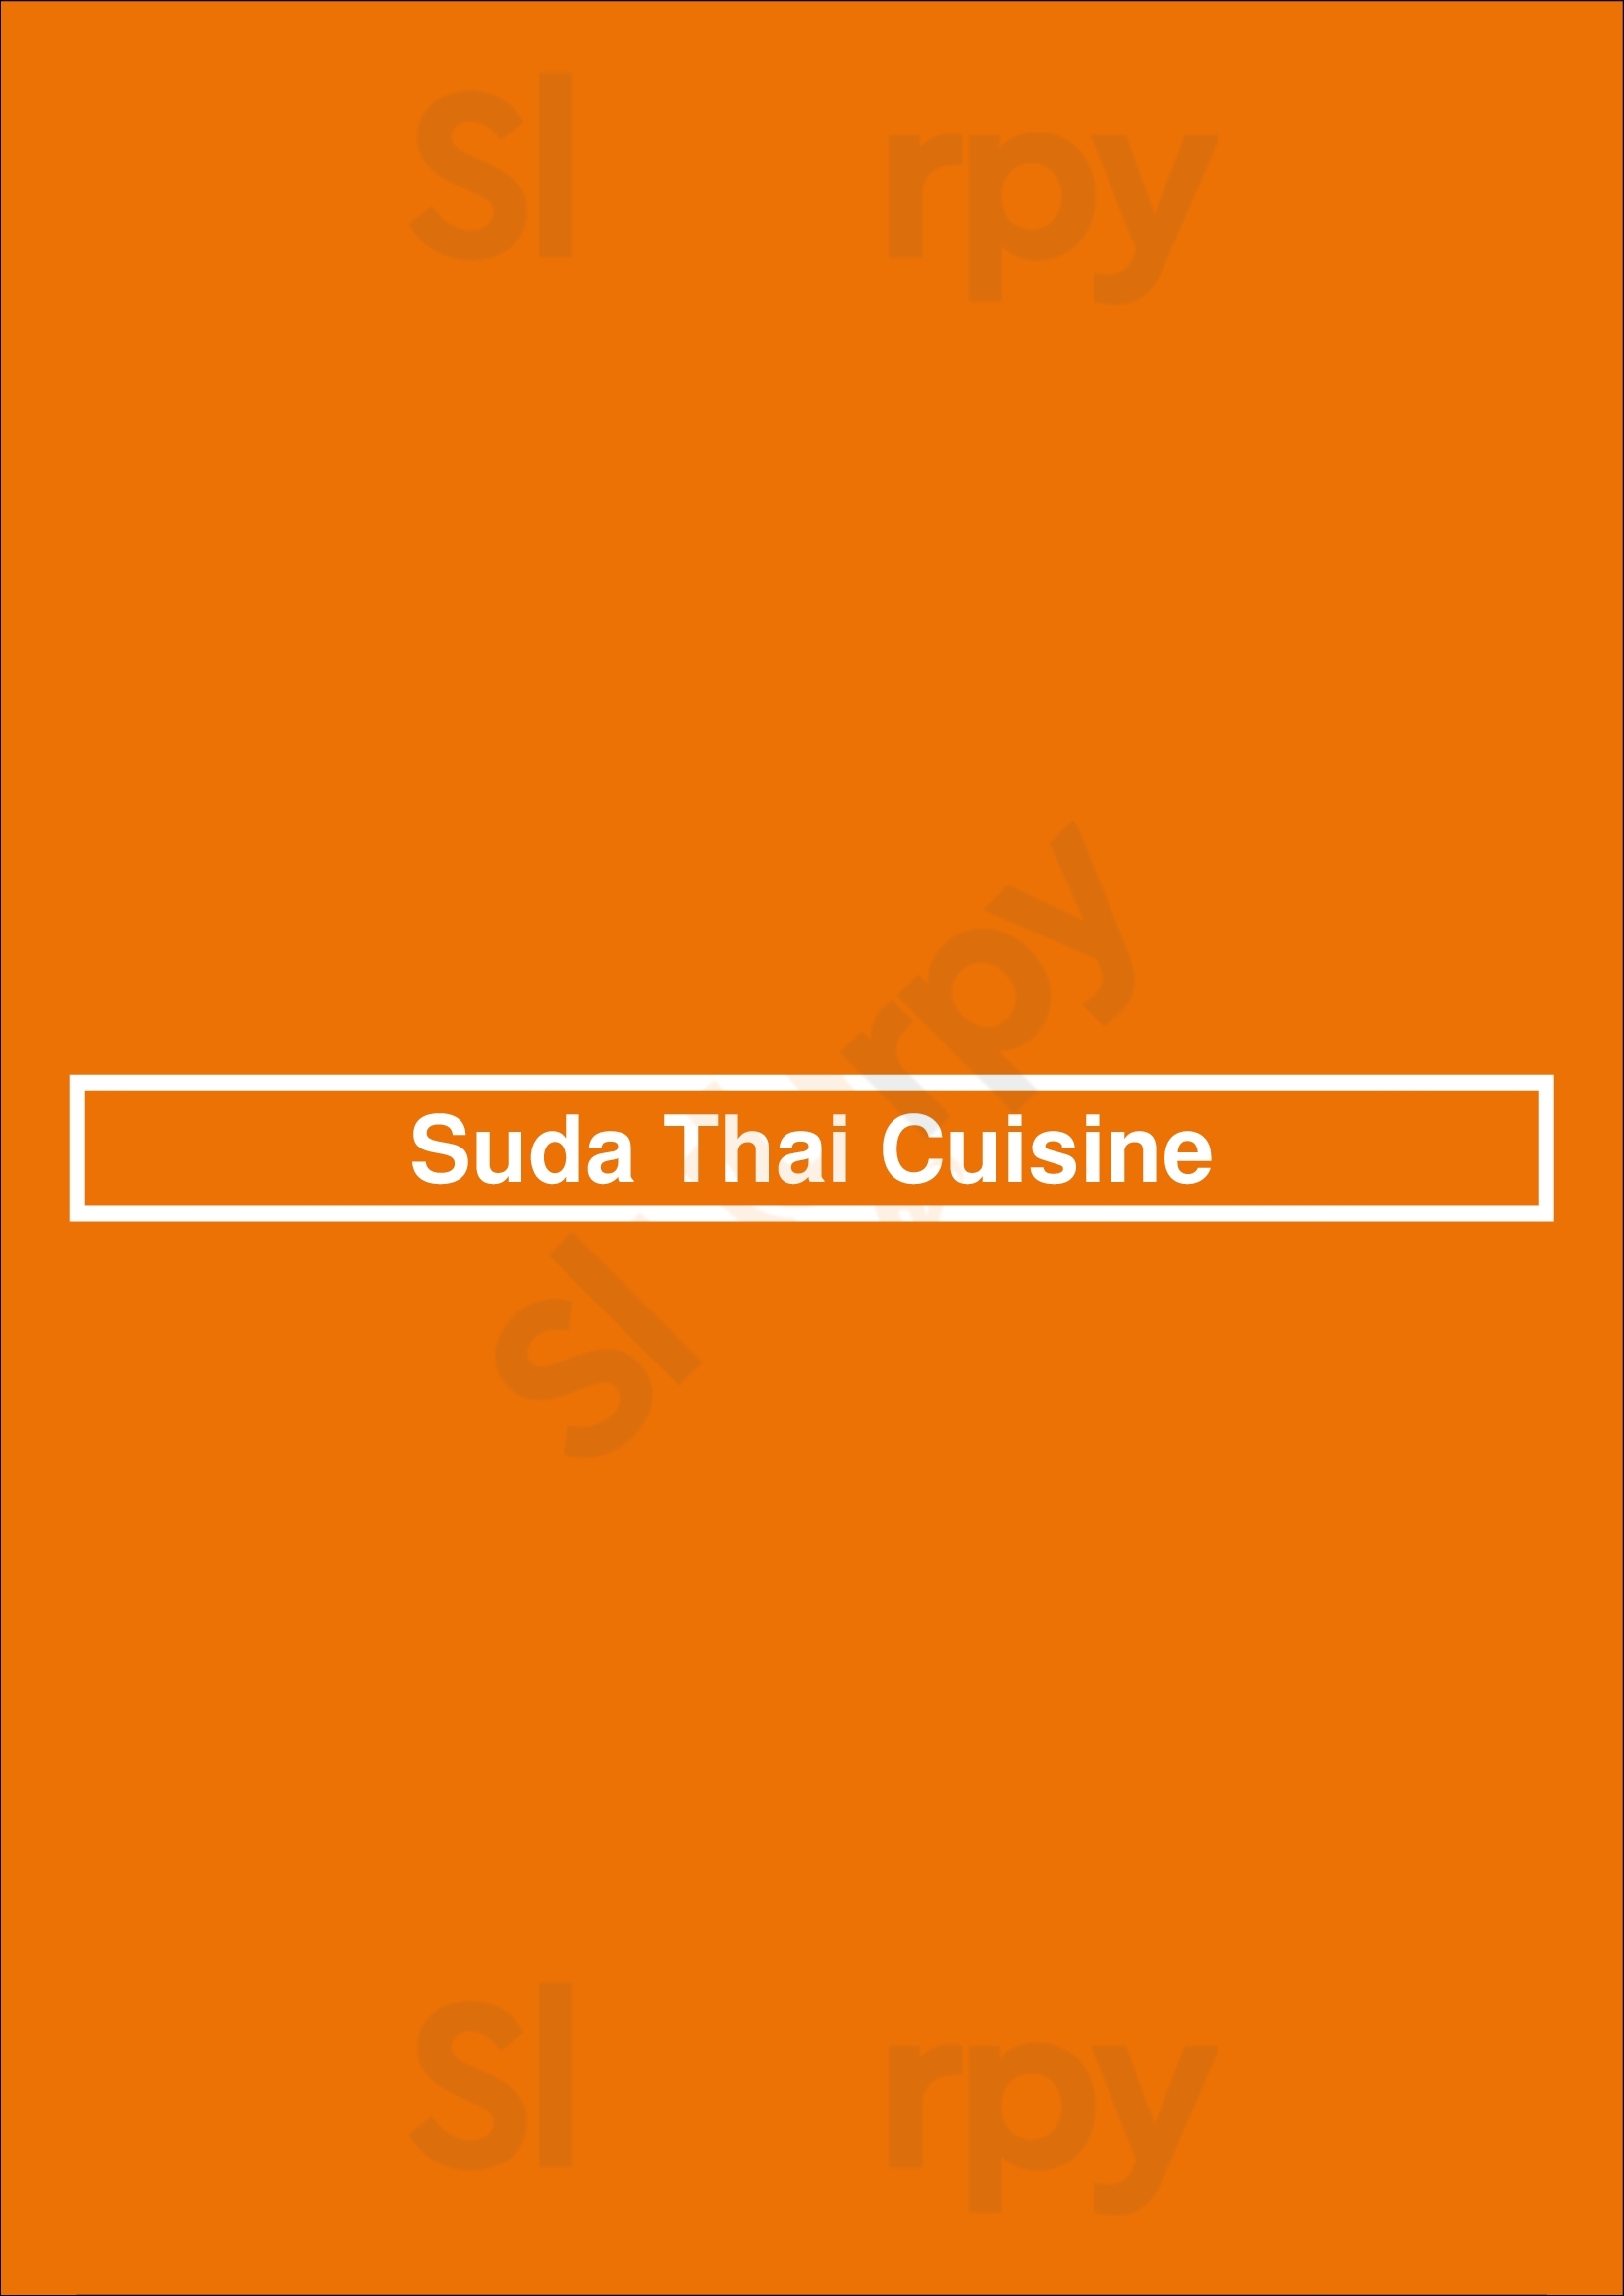 Suda Thai Cuisine Sherwood Park Menu - 1